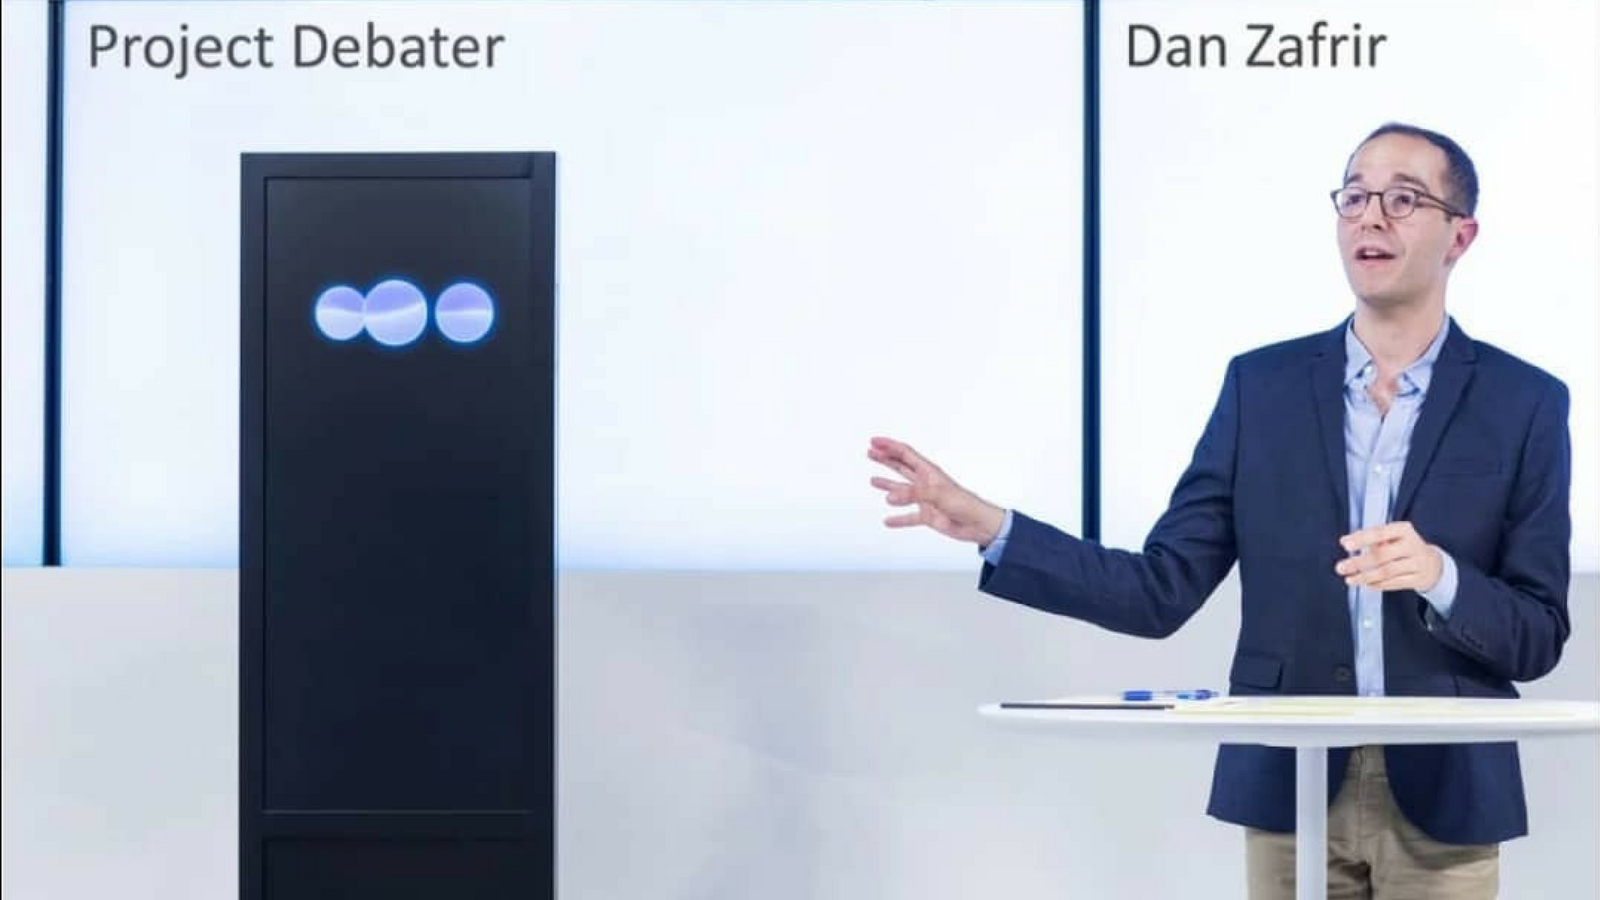 Israeli expert debater Dan Zafir debates against the IBM Project Debater on June 18, 2018, in San Francisco. Photo via Facebook.